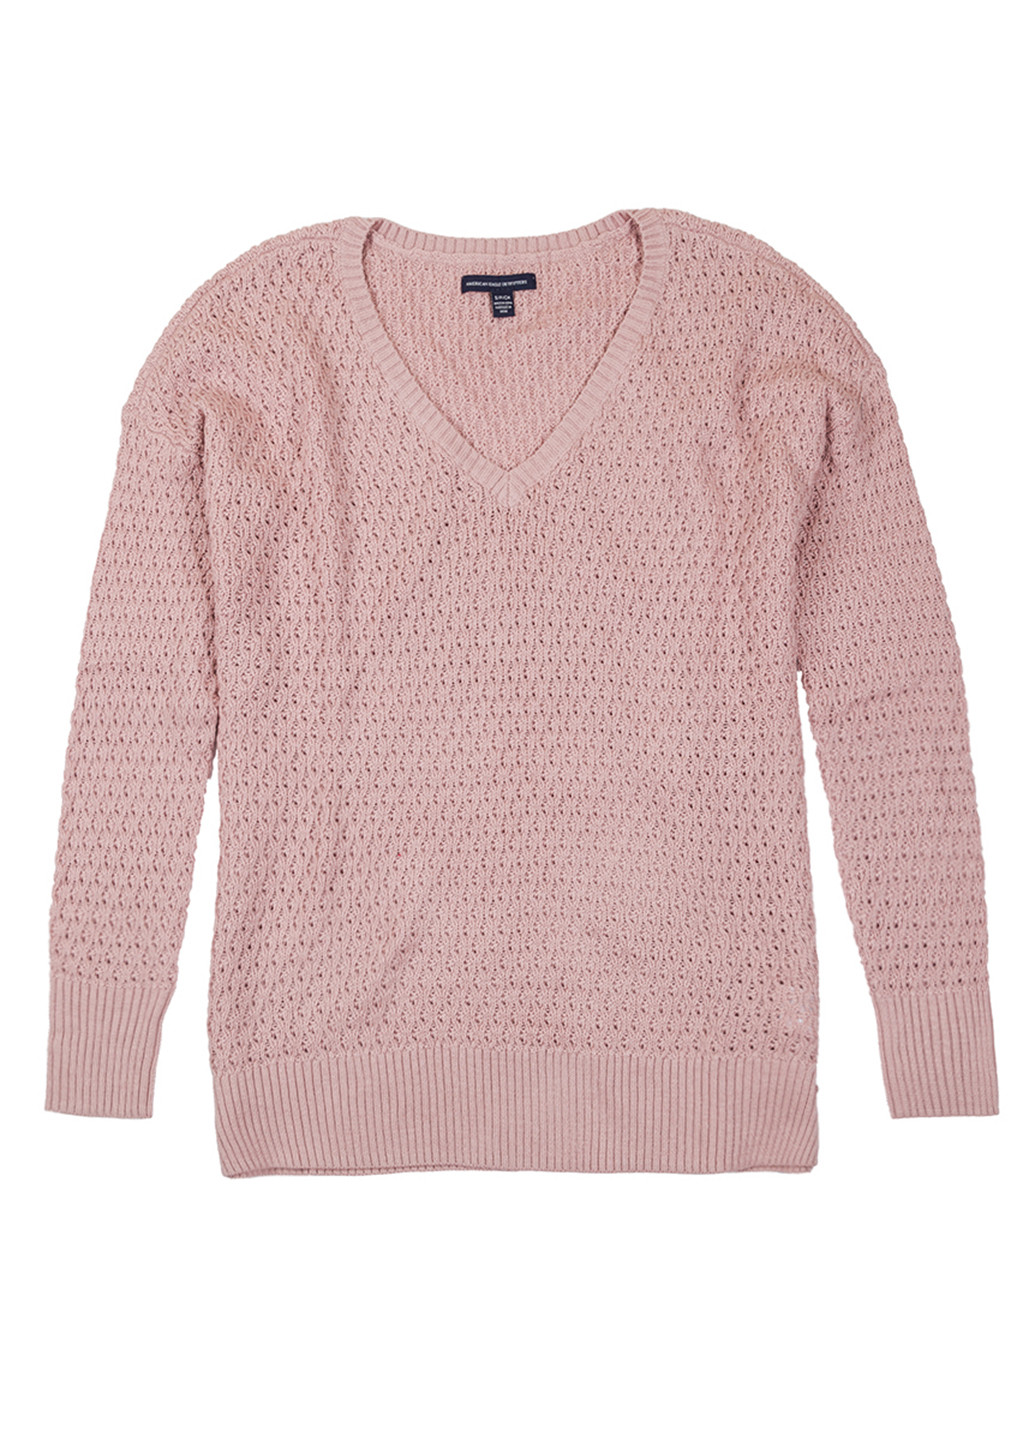 Светло-розовый зимний пуловер пуловер American Eagle